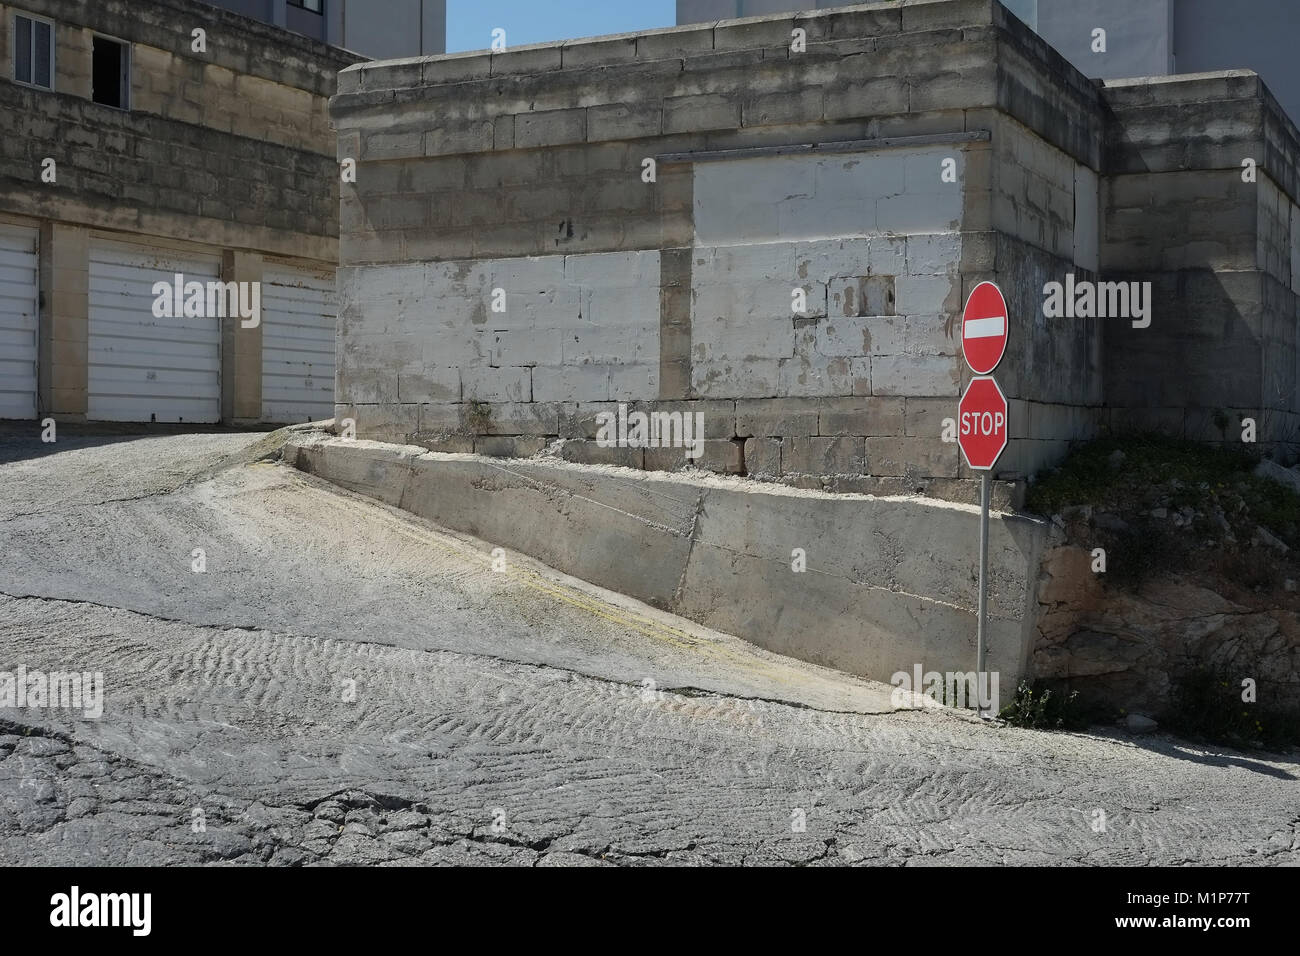 Concrete buildings and stop sign, Paceville, Malta Stock Photo